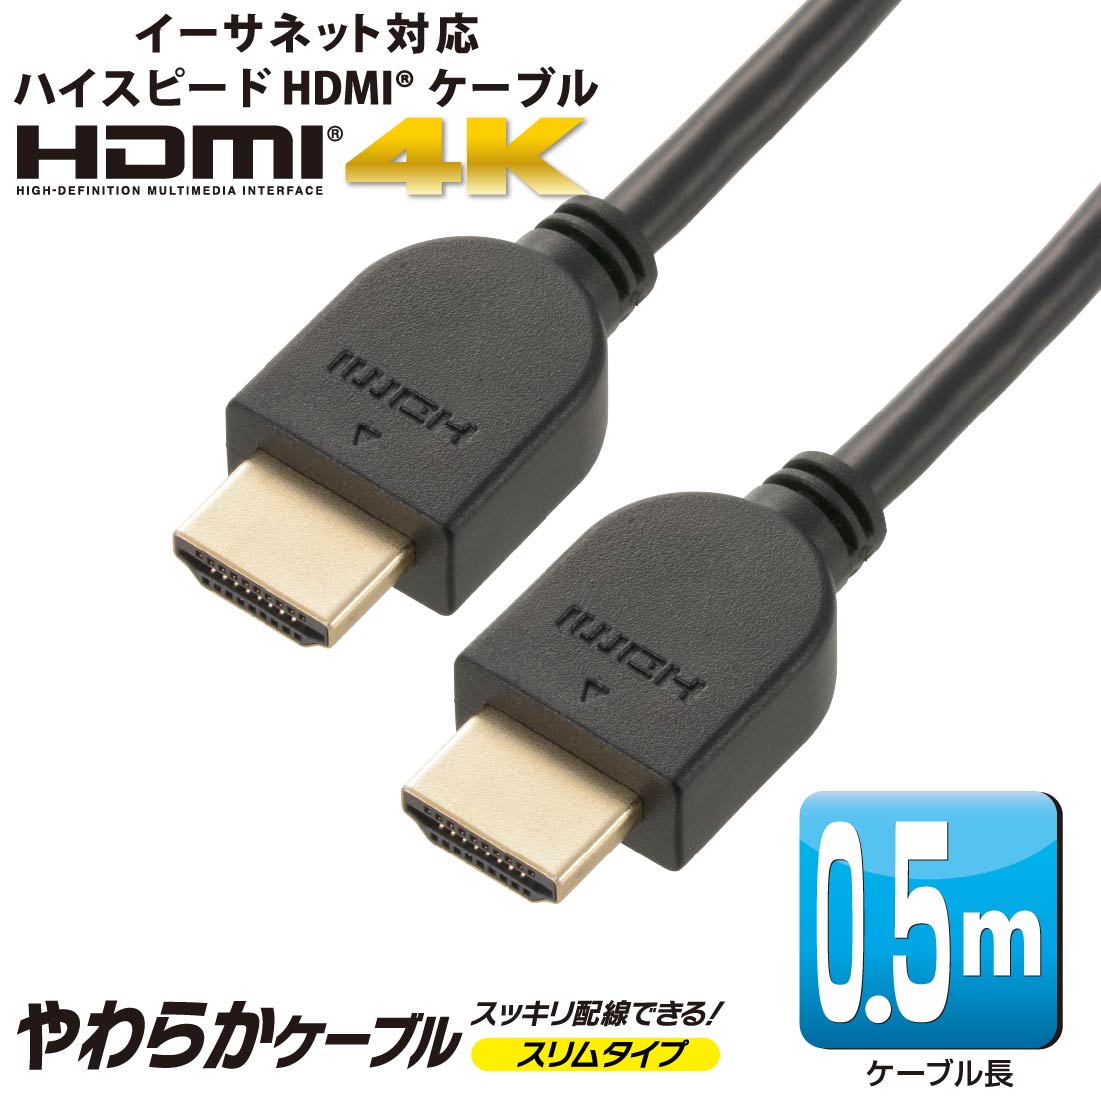 HDMIケーブル HDMIやわらかケーブル スリムタイプ ハイスピード 0.5m｜VIS-C05HDS-K 05-0555 オーム電機 1